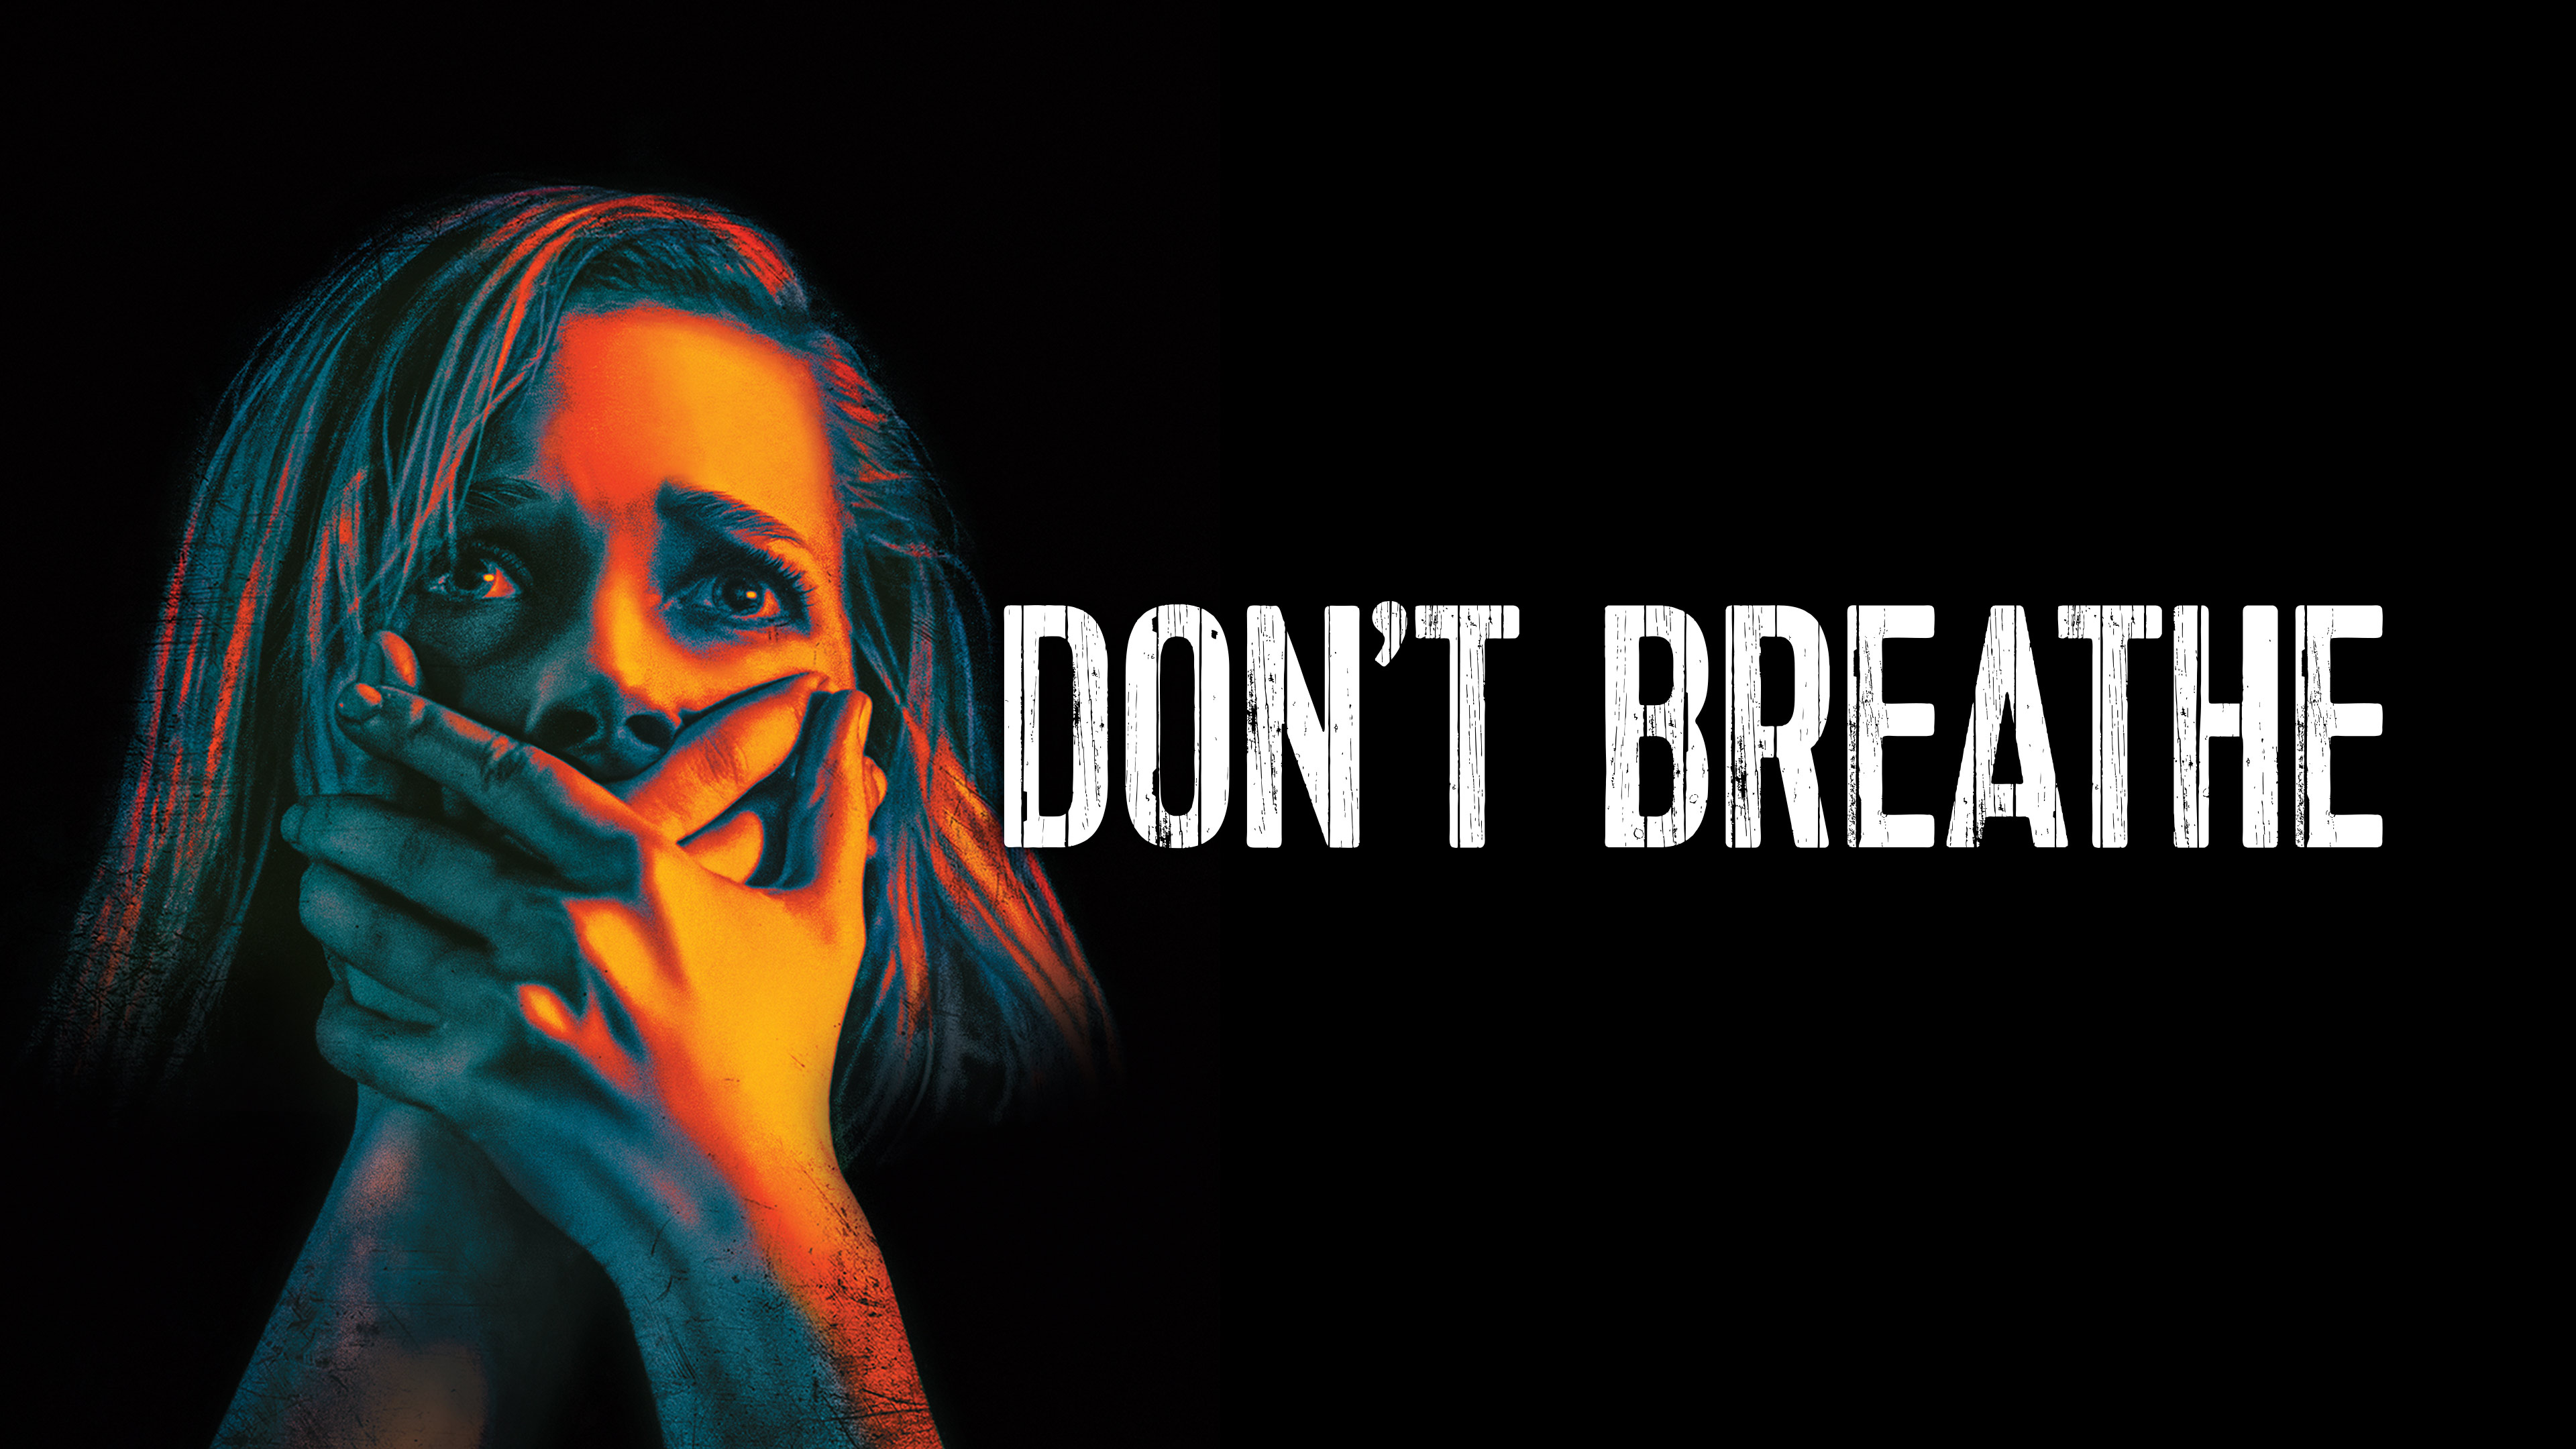 Watch Don't Breathe Online | Stream Full Movies